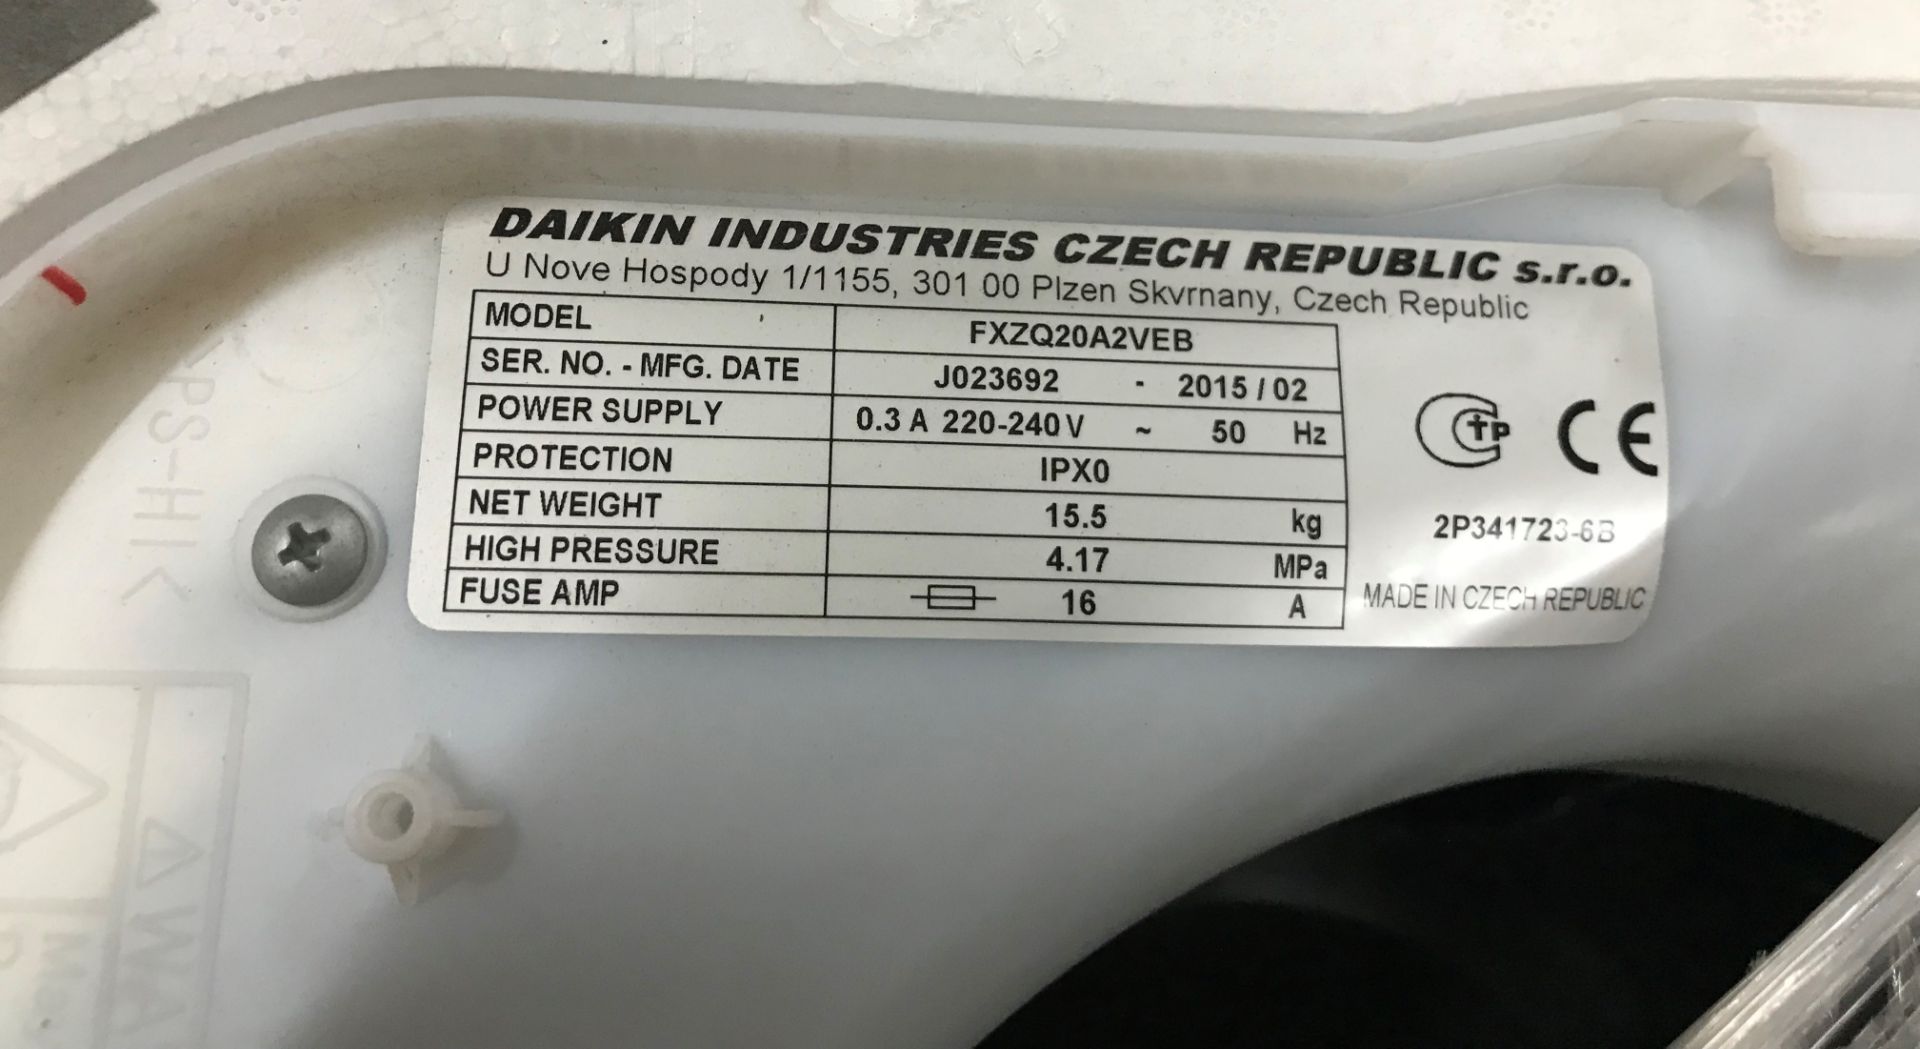 Daikin FXZQ40A2VEB VRV Indoor 600mm Air Conditioning Cassette Unit - Image 4 of 4